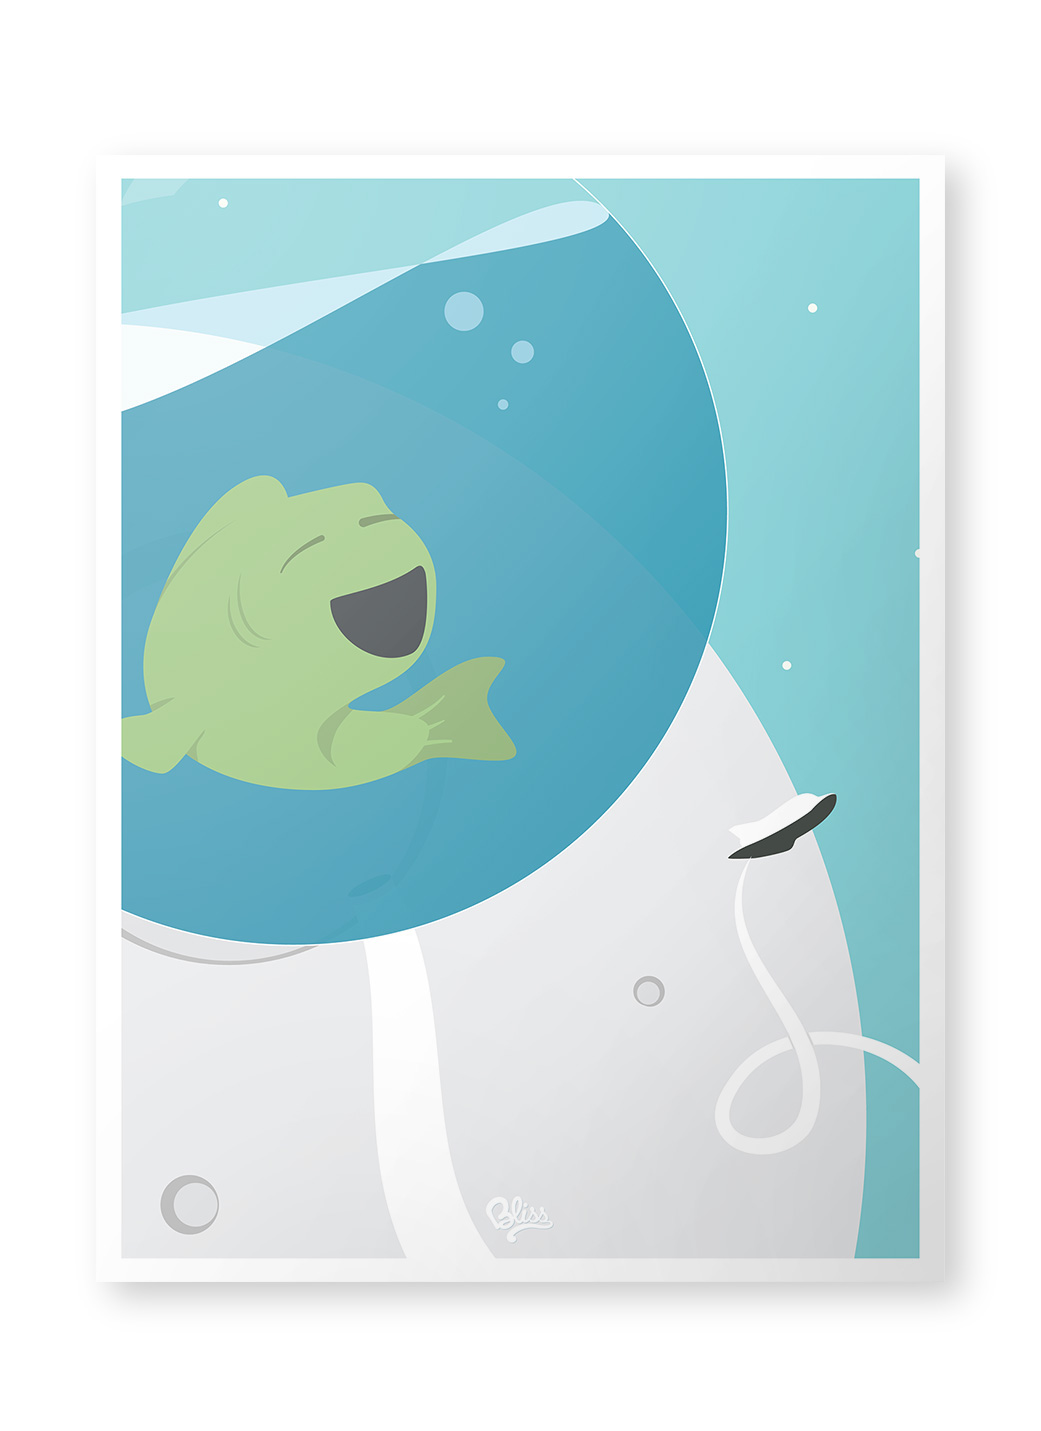 bliss SCAD RocketPig TurboTurtle Astrofish ScubaBear HAND LETTERING logo app brand